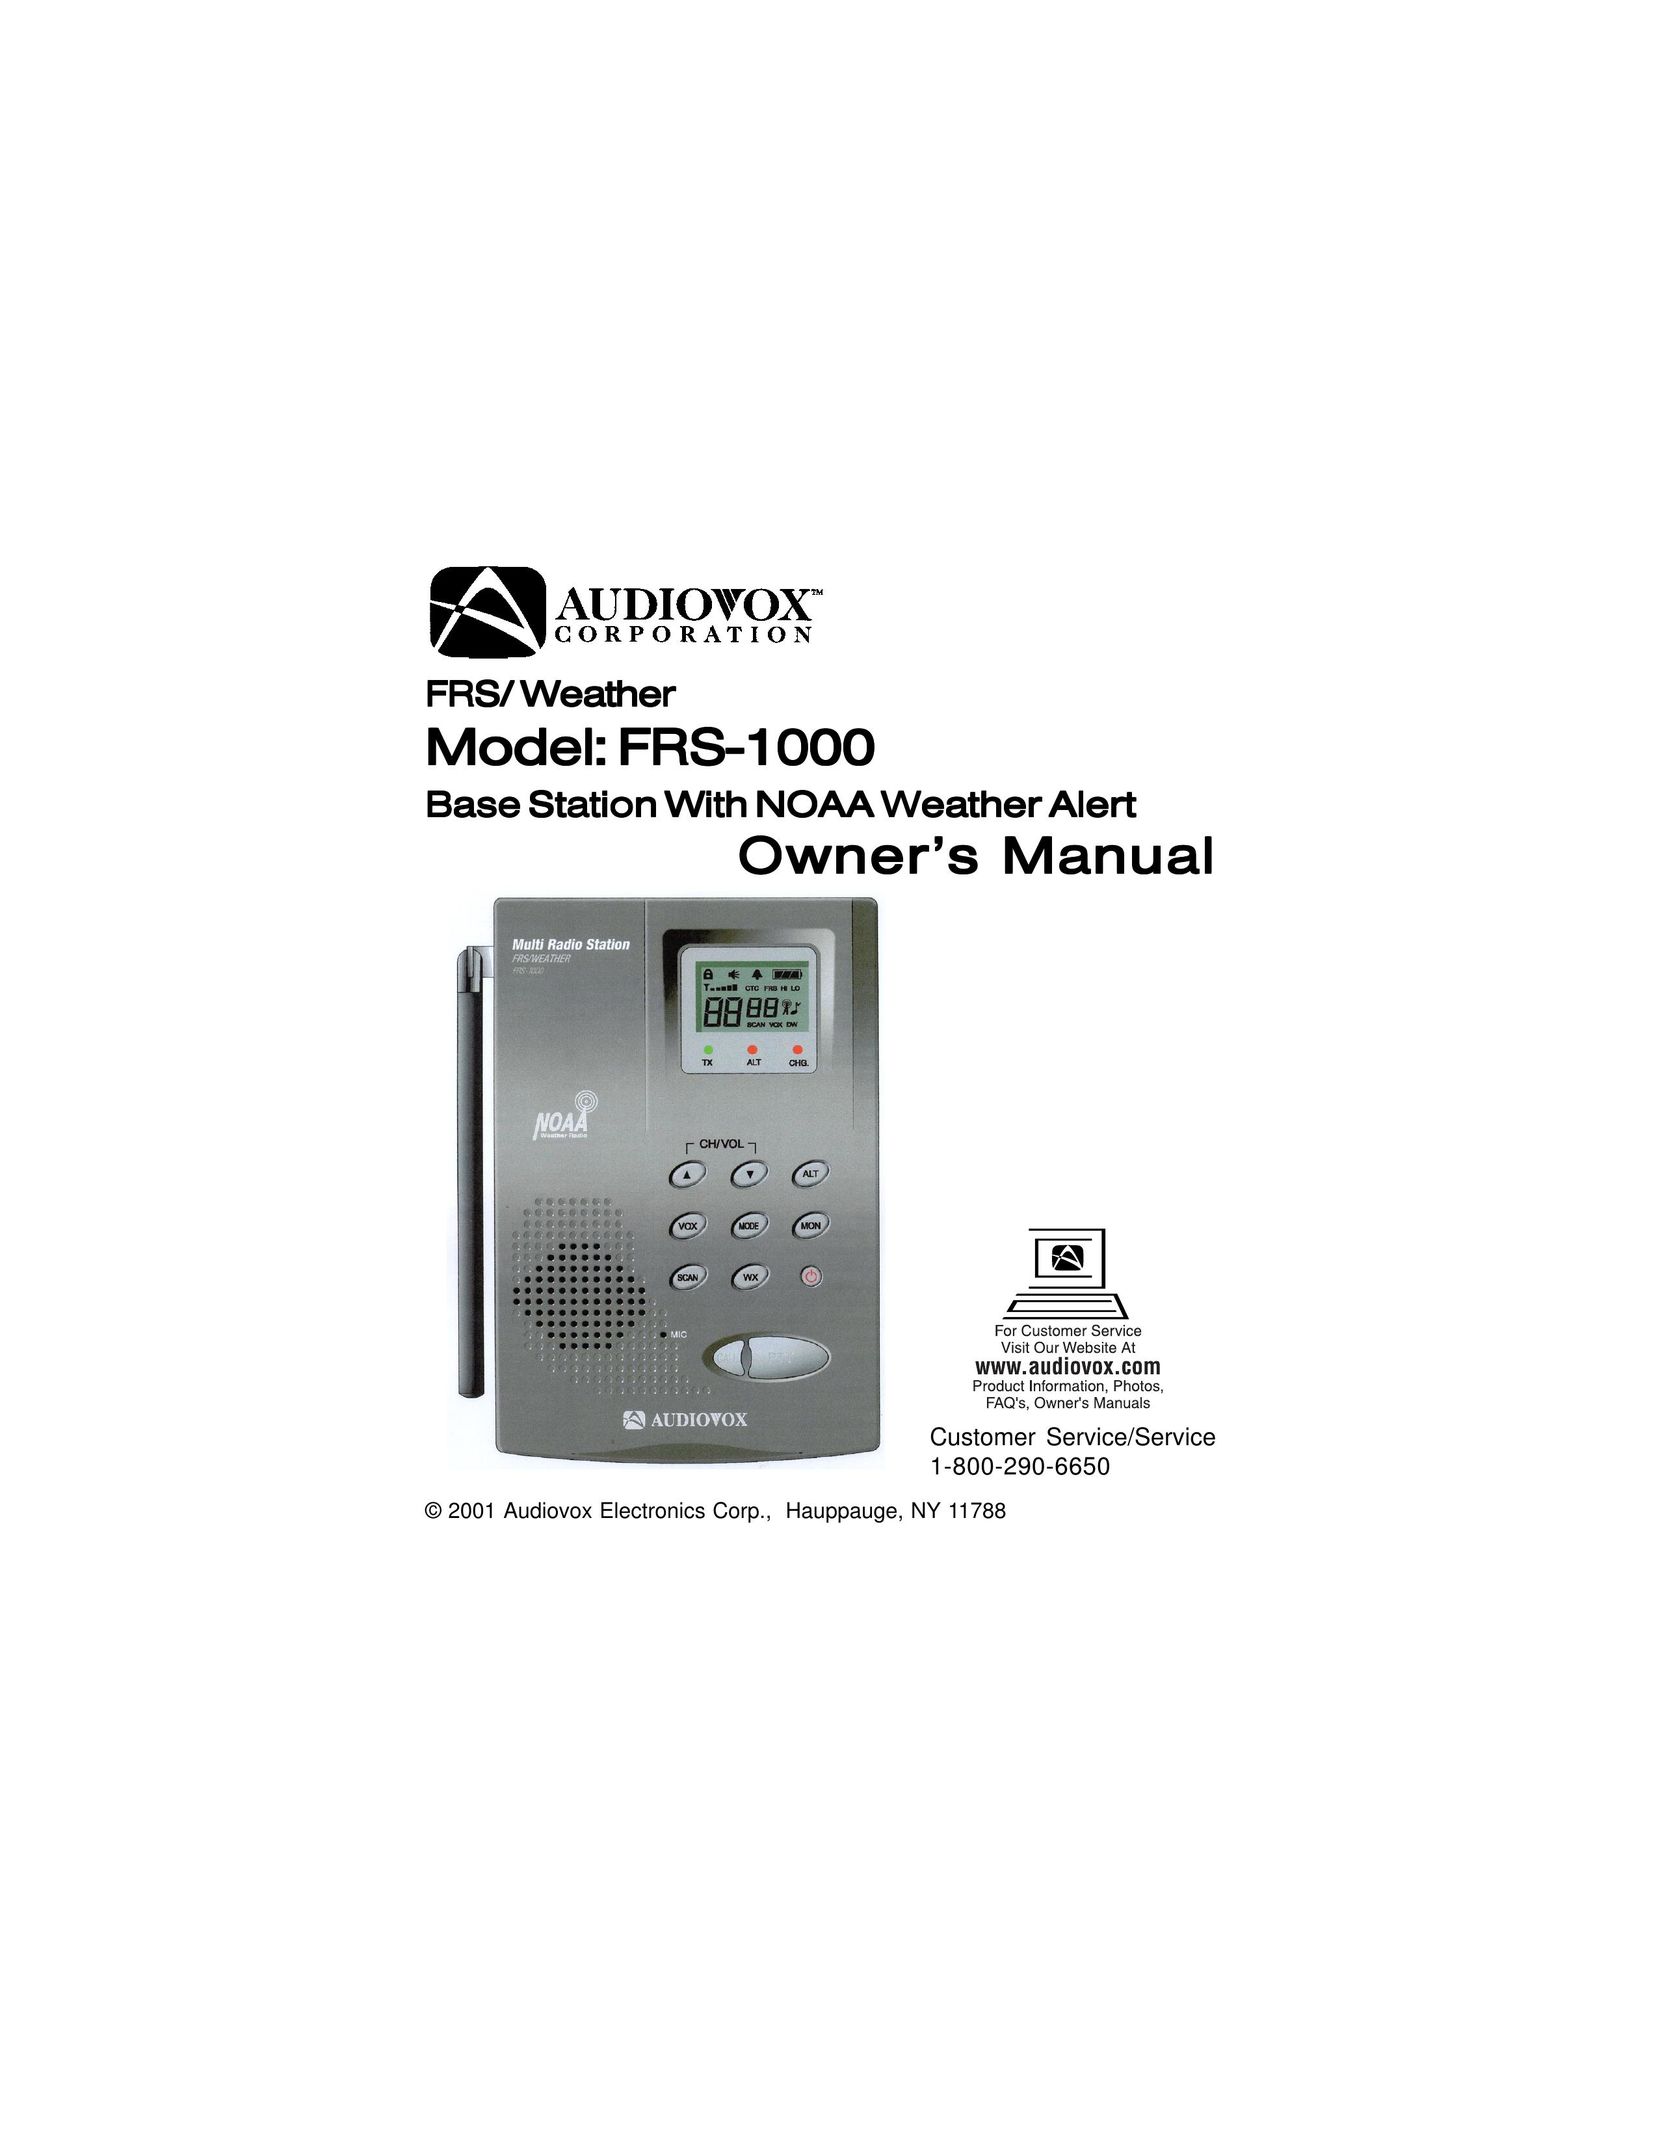 Konica Minolta FRS-1000 Two-Way Radio User Manual